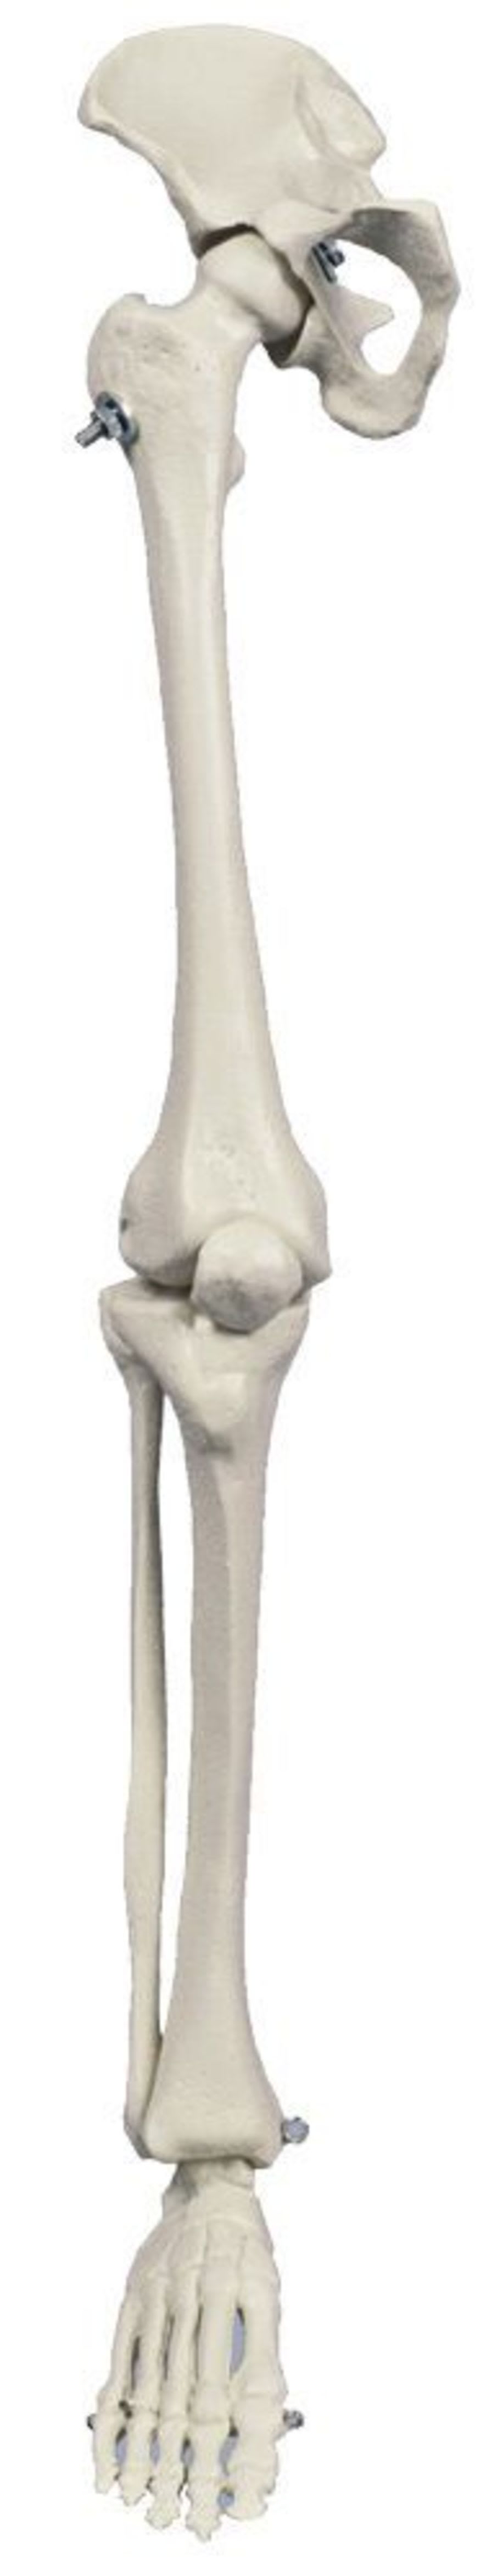 Leg anatomical model / skeleton / miniature MI240 RÜDIGER - ANATOMIE